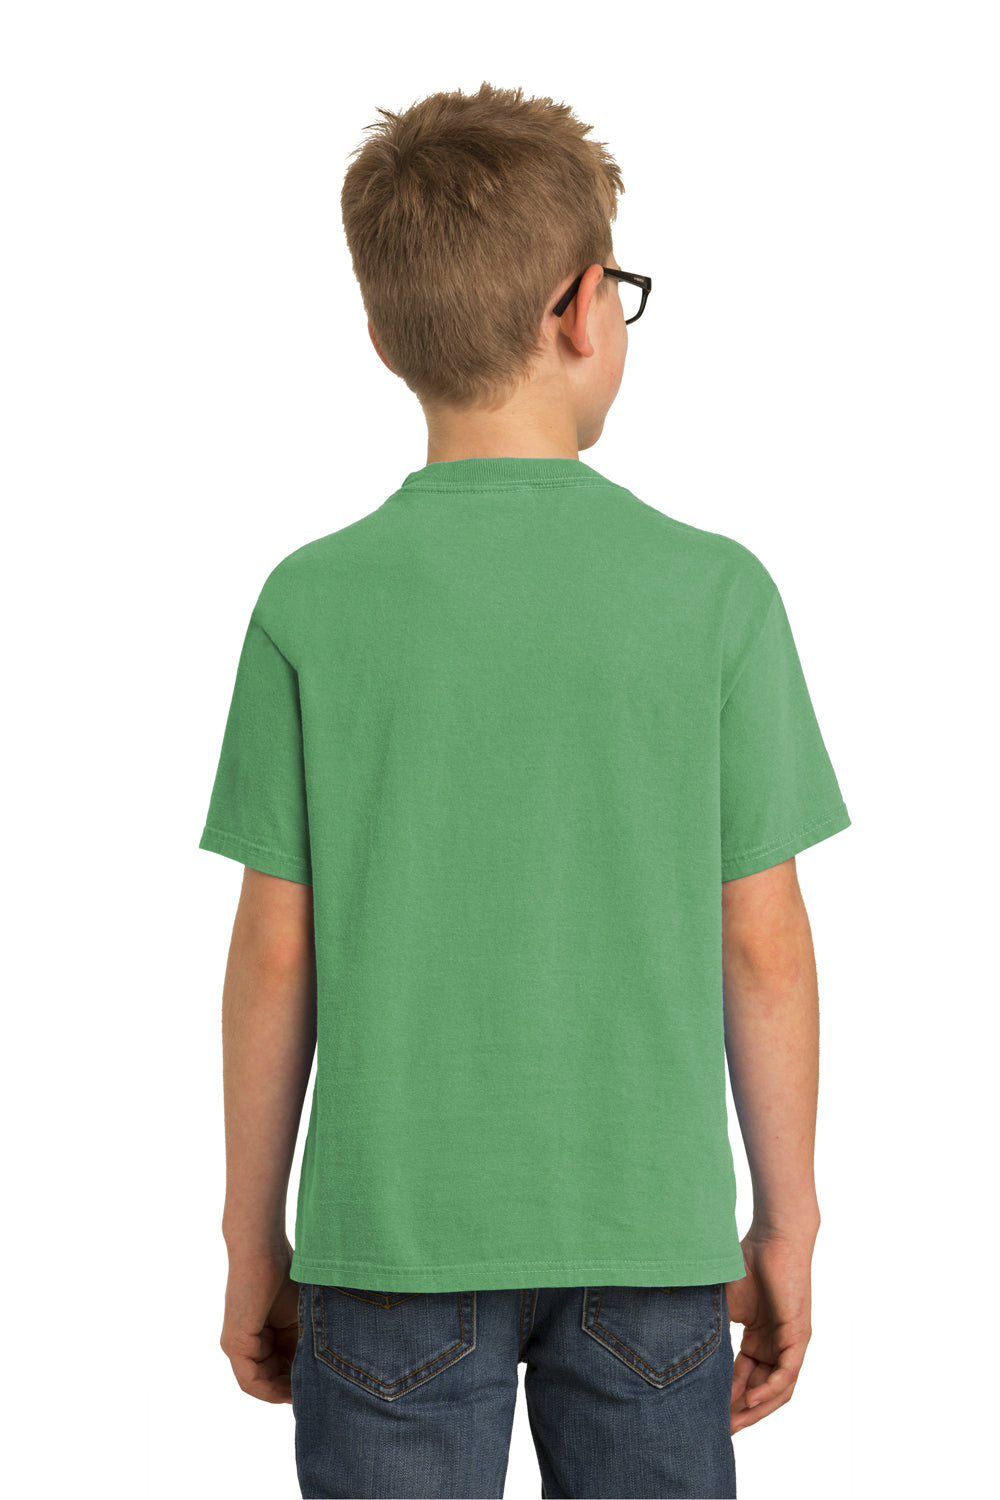 Port & Company PC099Y Youth Beach Wash Short Sleeve Crewneck T-Shirt Safari Green Back